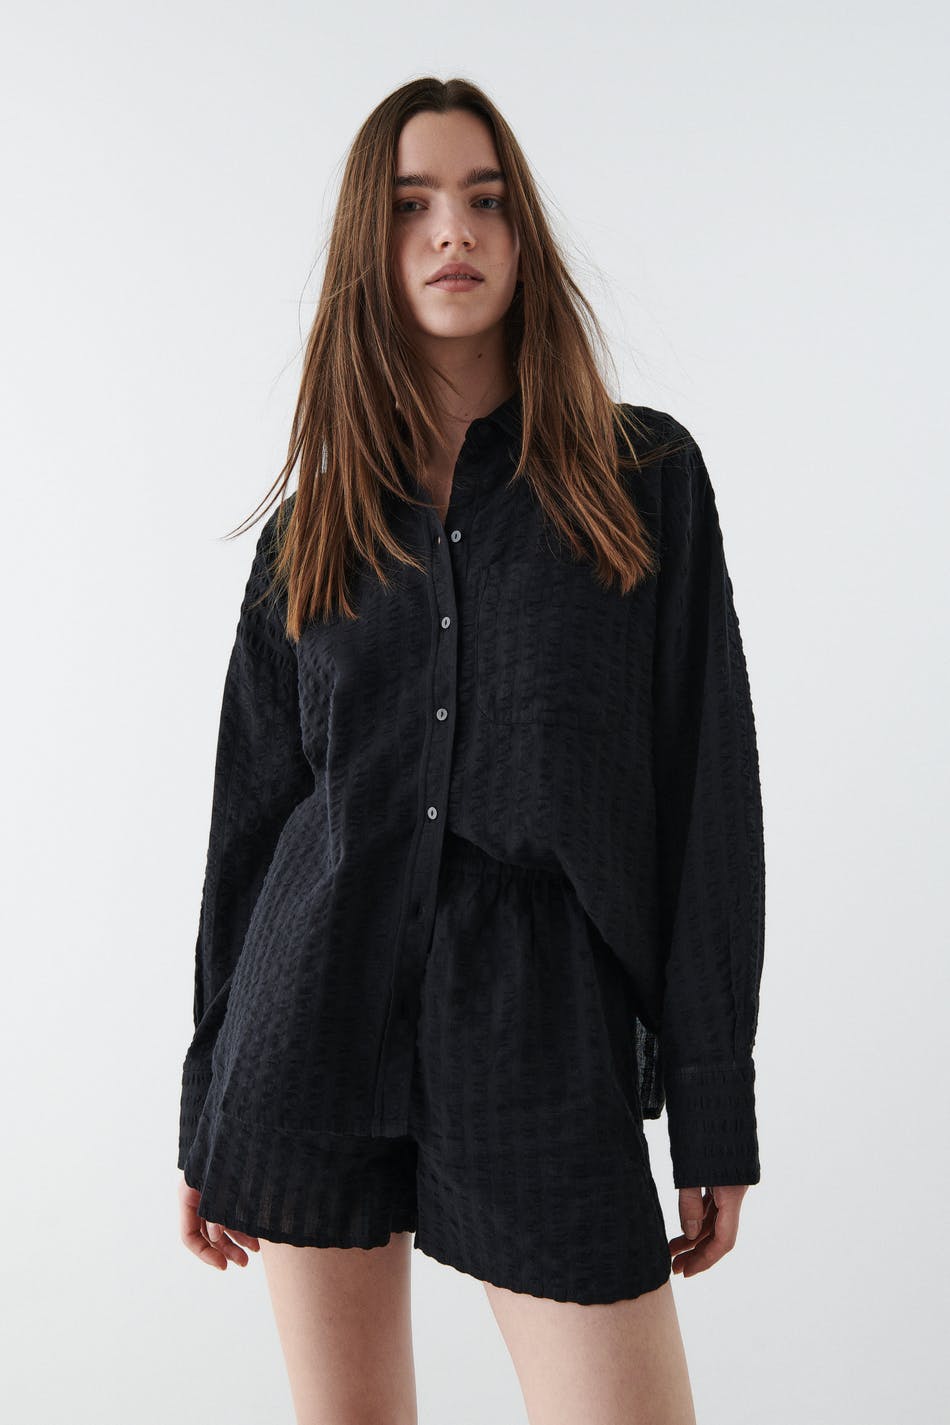 Gina Tricot Amanda pyjamas shorts M  Black (9000)